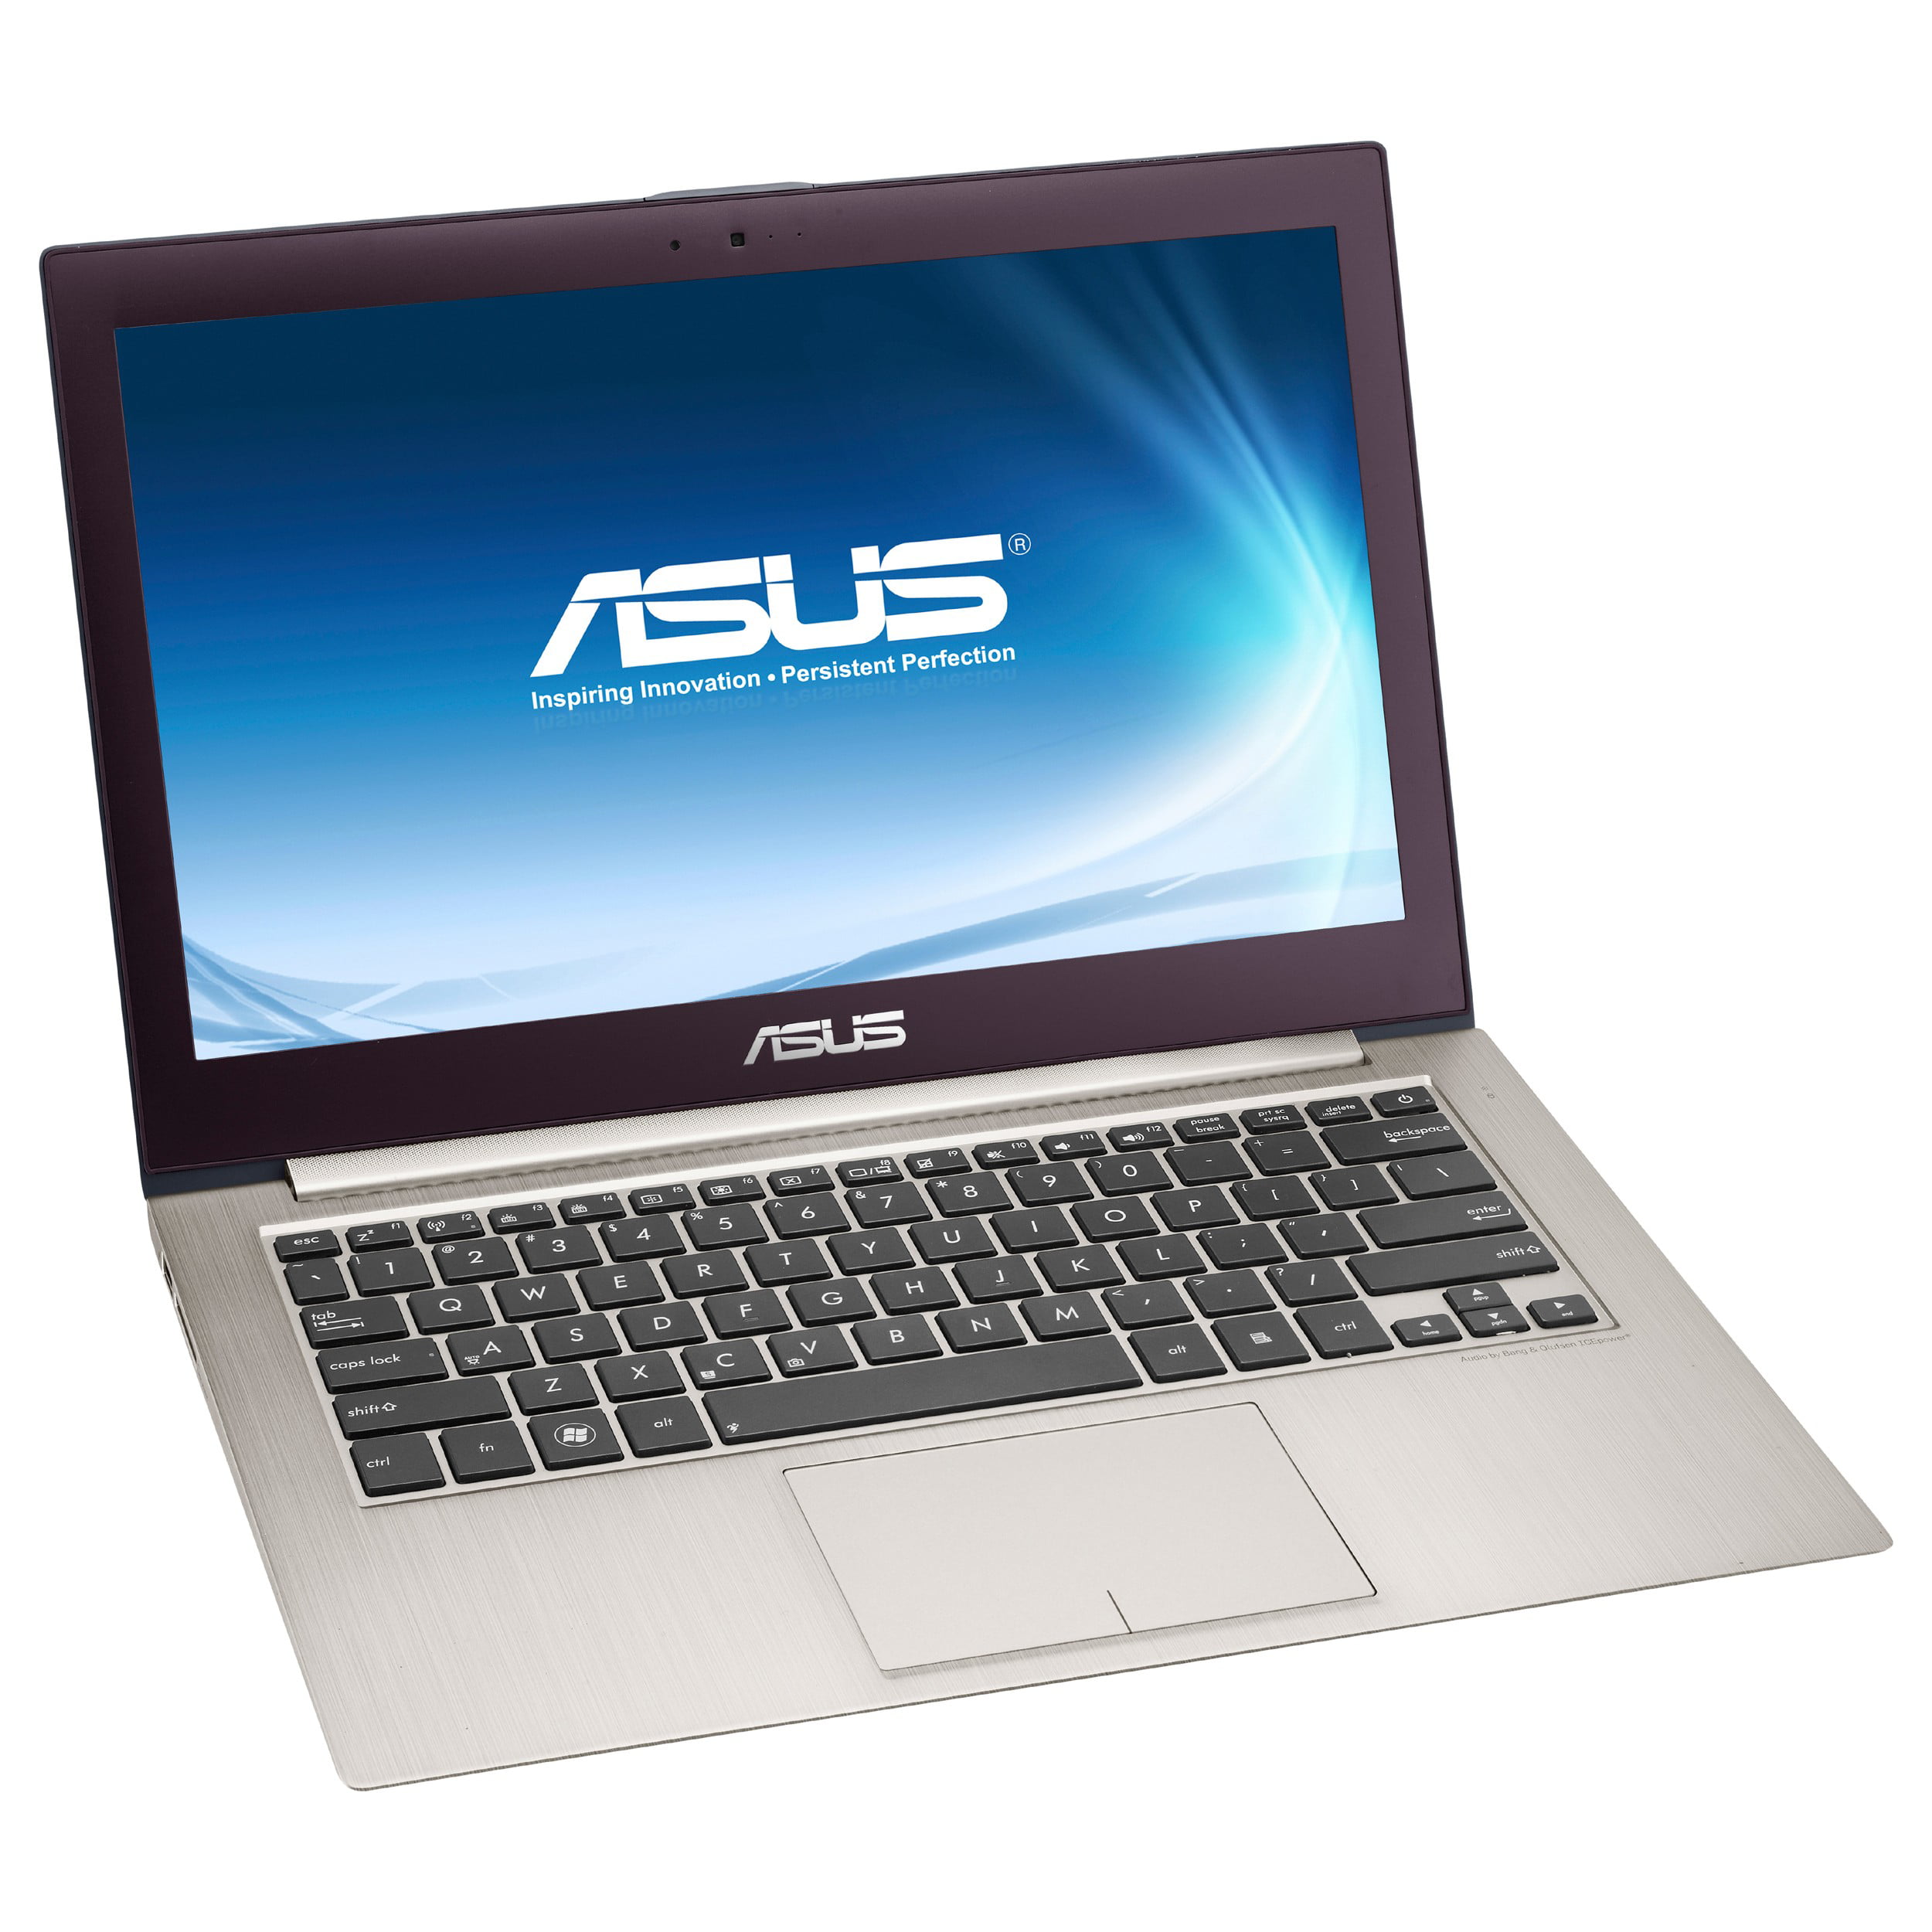 asus-zenbook-ux31-13-inch-laptop-old-version-walmart